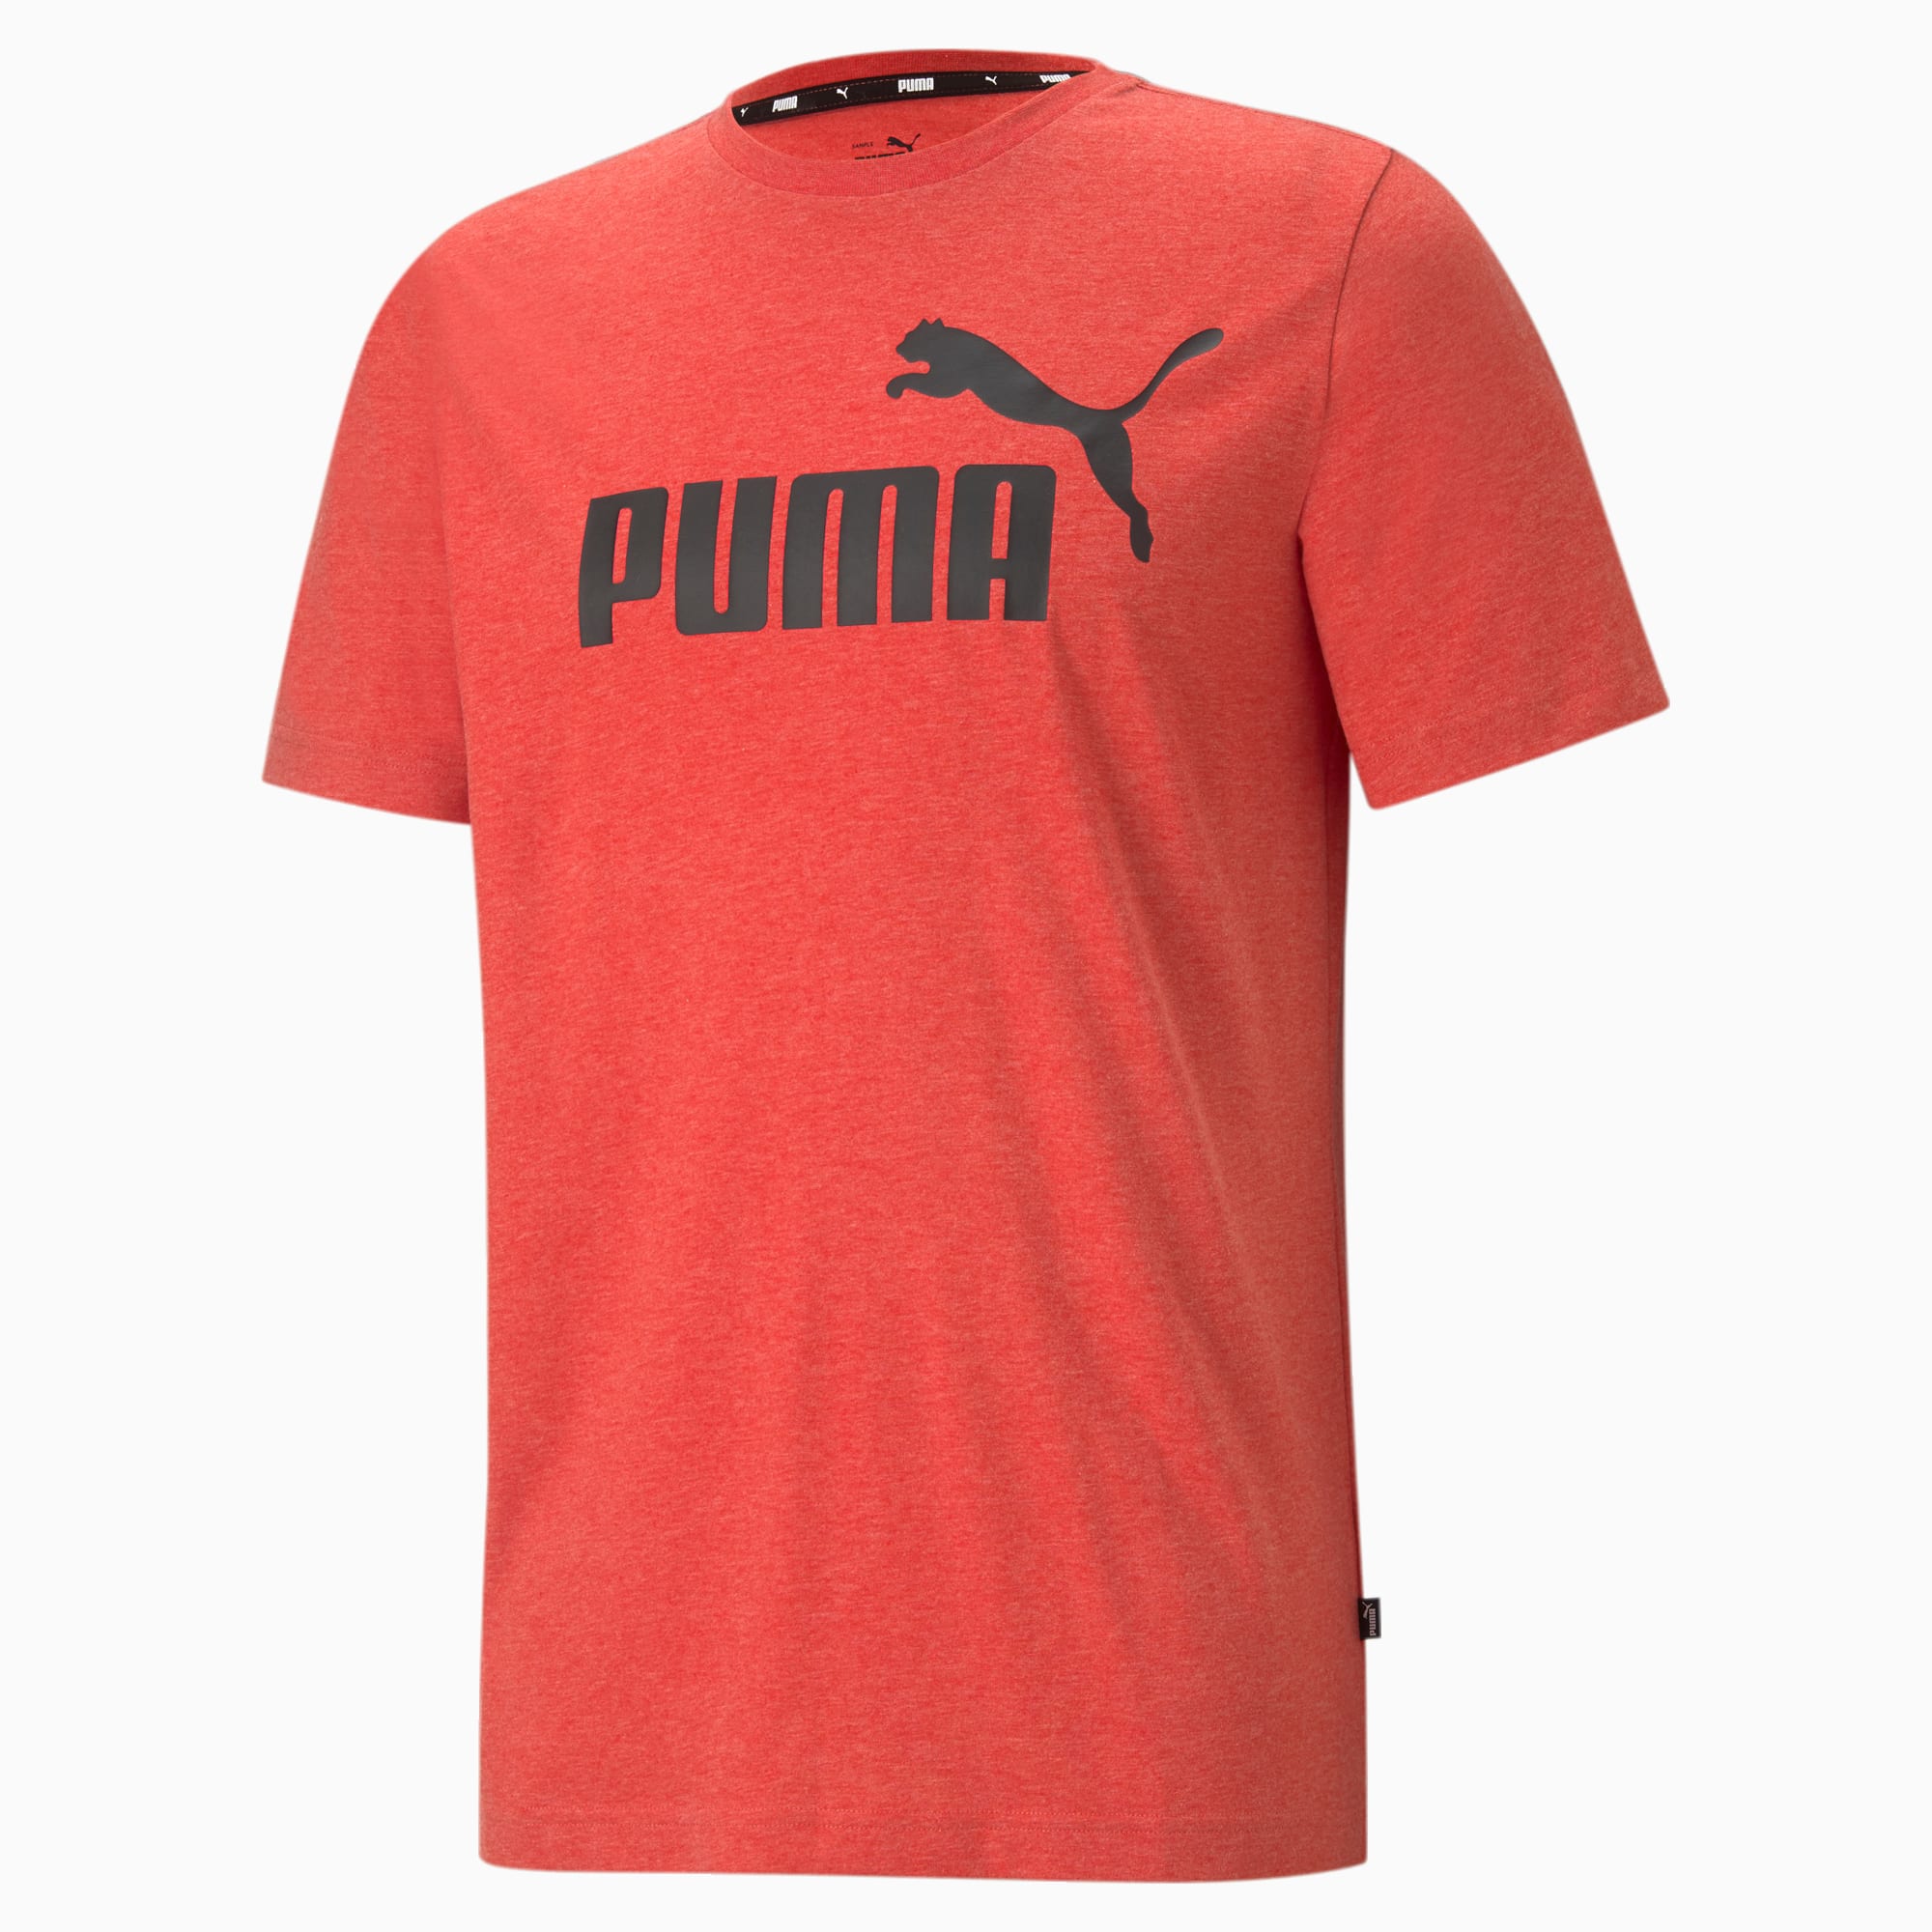 PUMA Essentials Heather Men's T-Shirt, High Risk Red, Size 3XL, Clothing